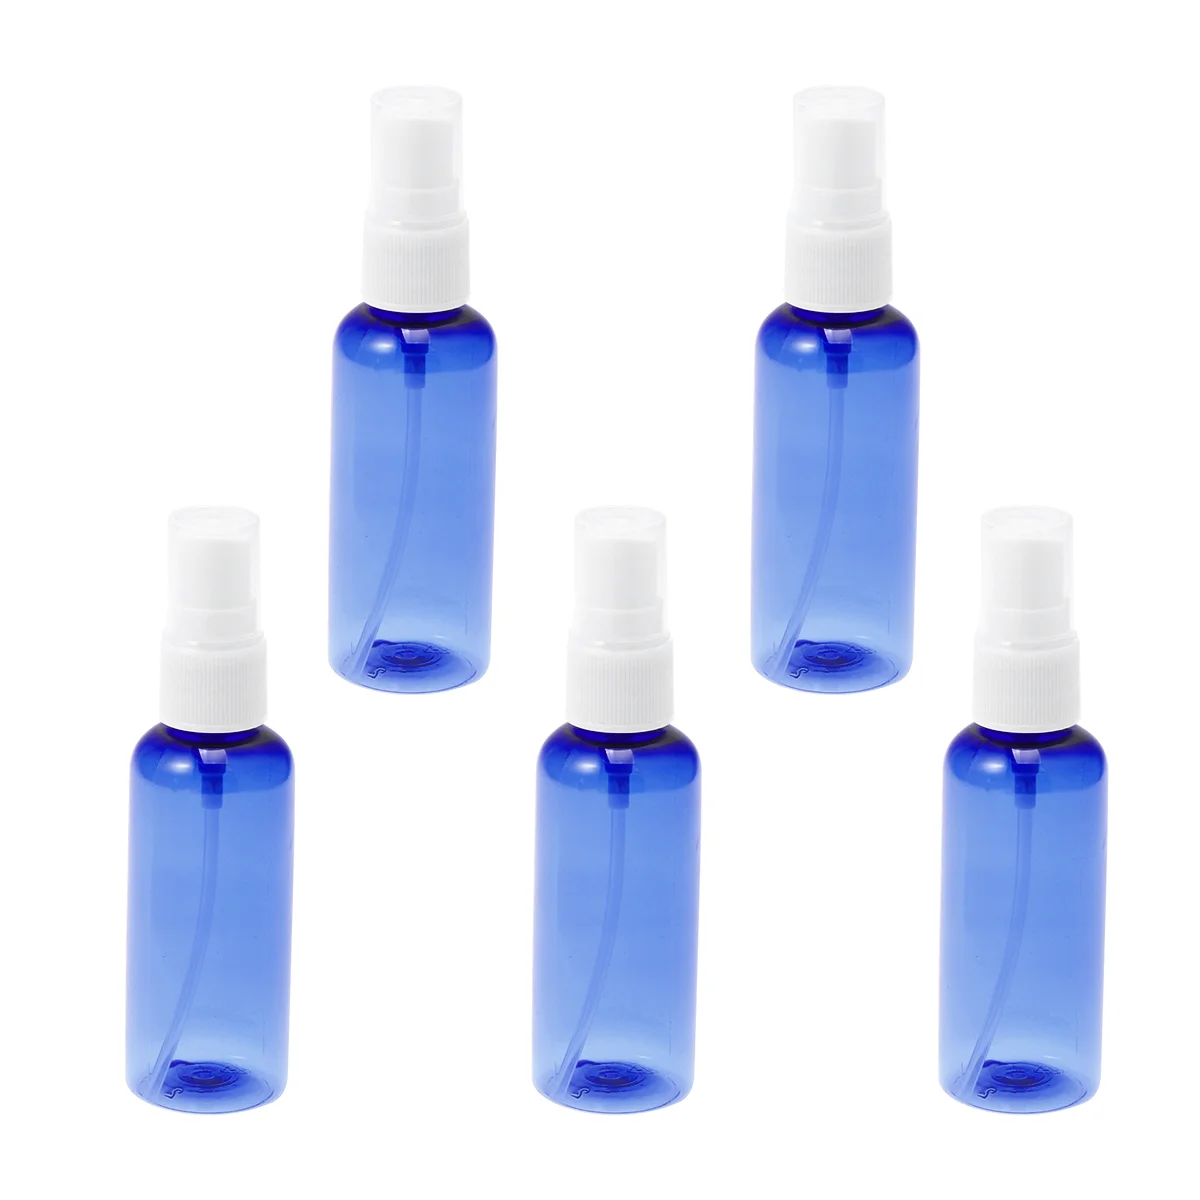 

5 Pcs Kitchen Decore Spray Bottle Perfume Atomizer Essential Oil Bottles Mist Sprayer Misting Cosmetics Perfumes